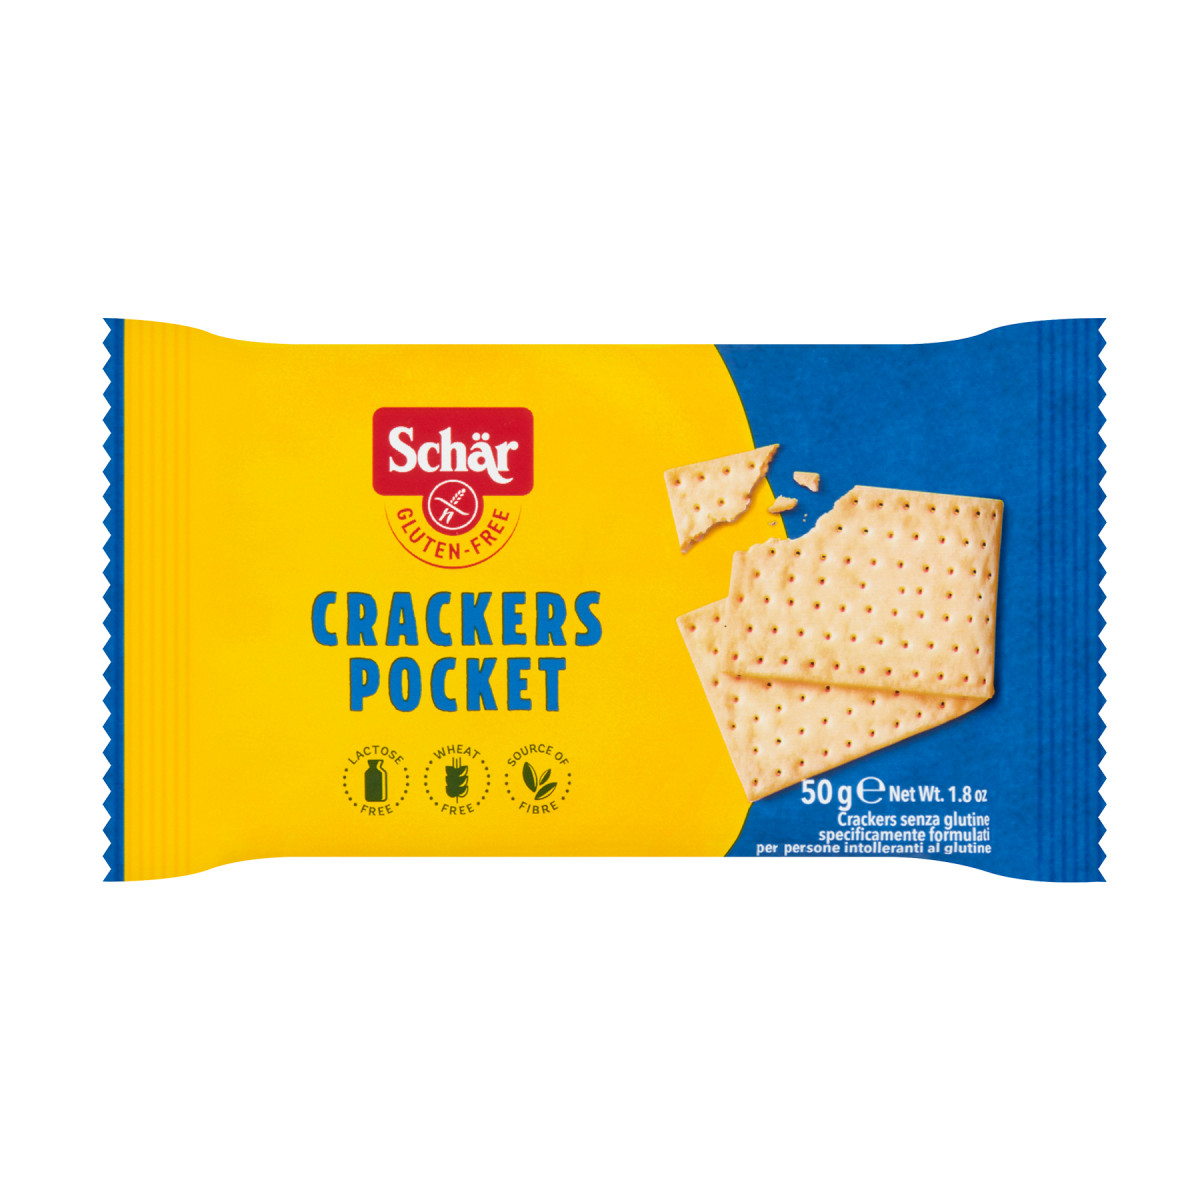 Crackers Pocket